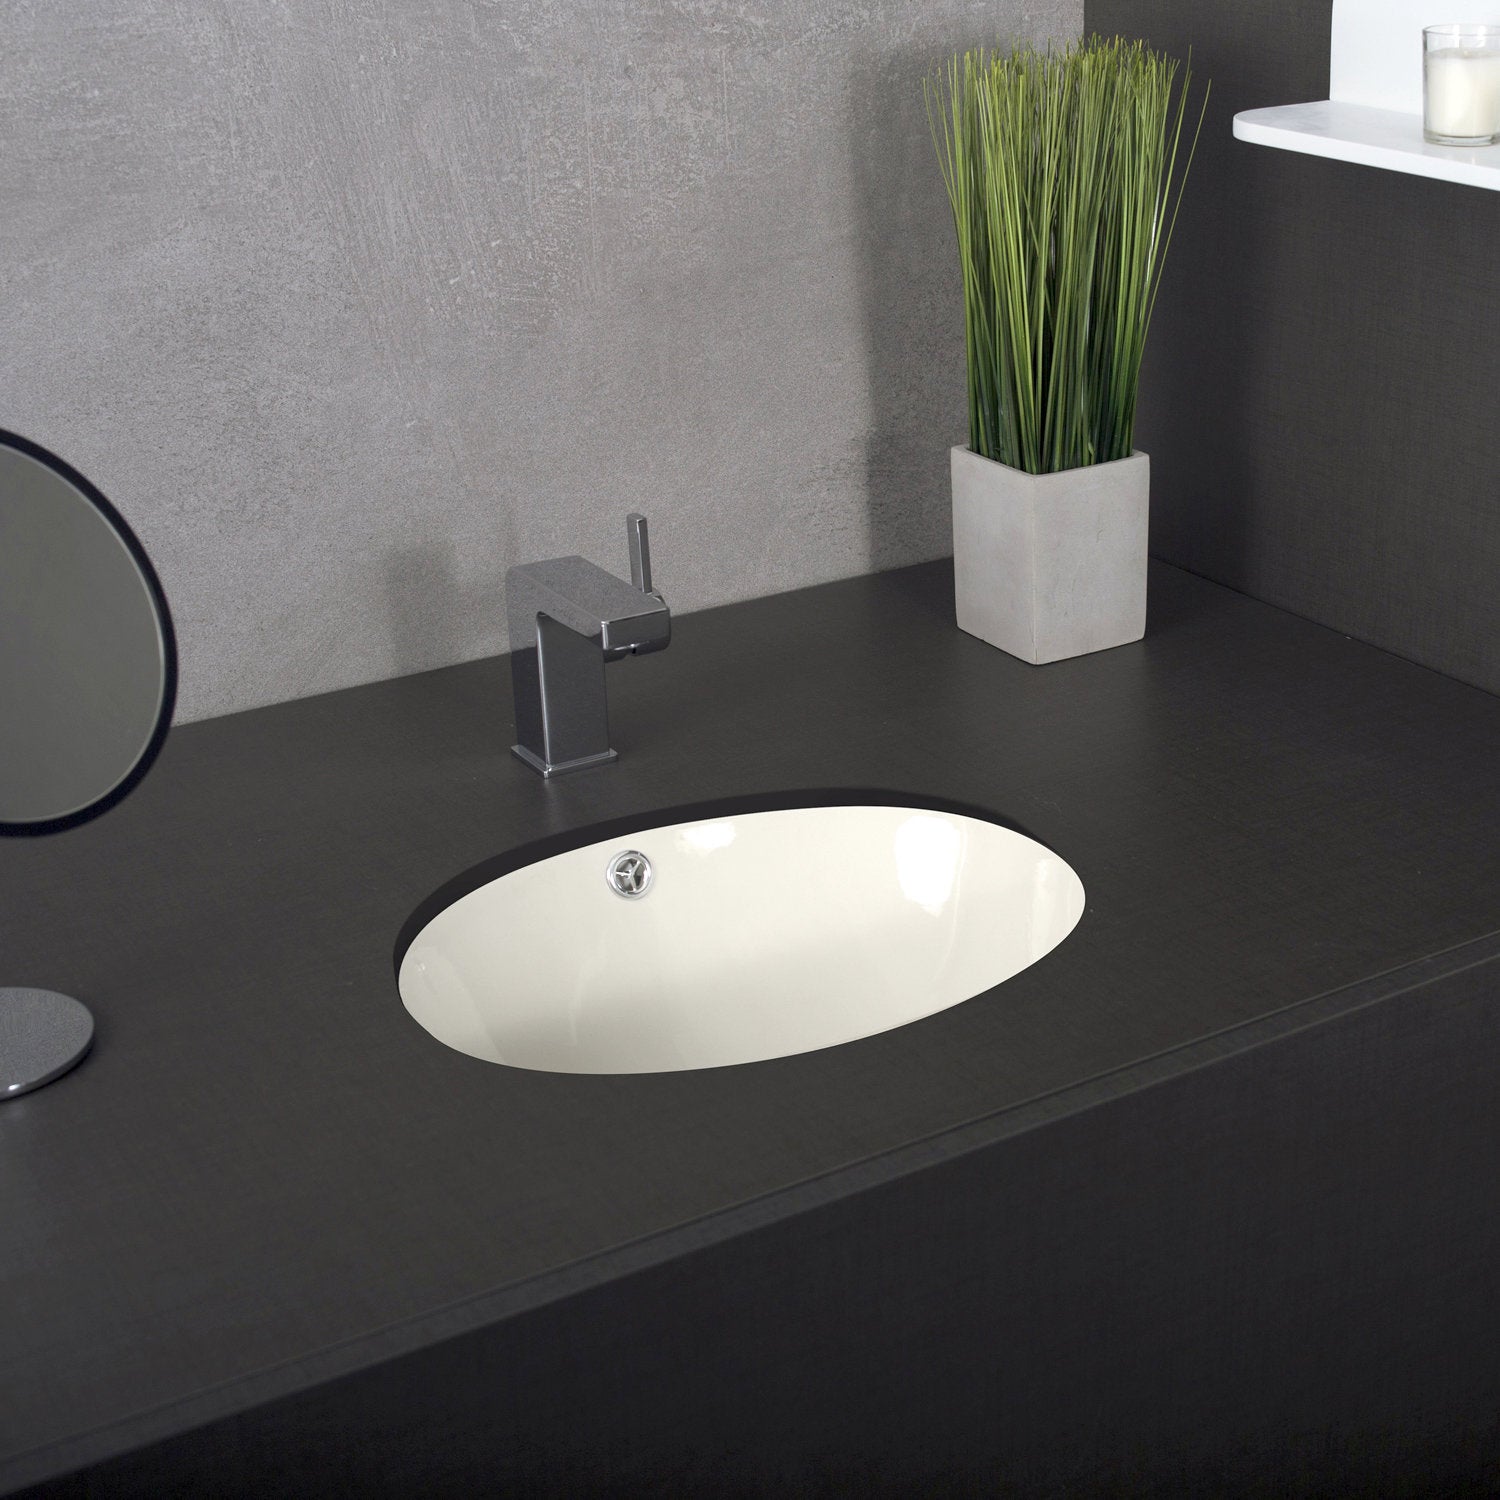 DAX Ceramic Oval Single Bowl Undermount Bathroom Sink, Ivory Finish, 18 x 14-3/4 x 7-1/2 Inches (BSN-205B-I)